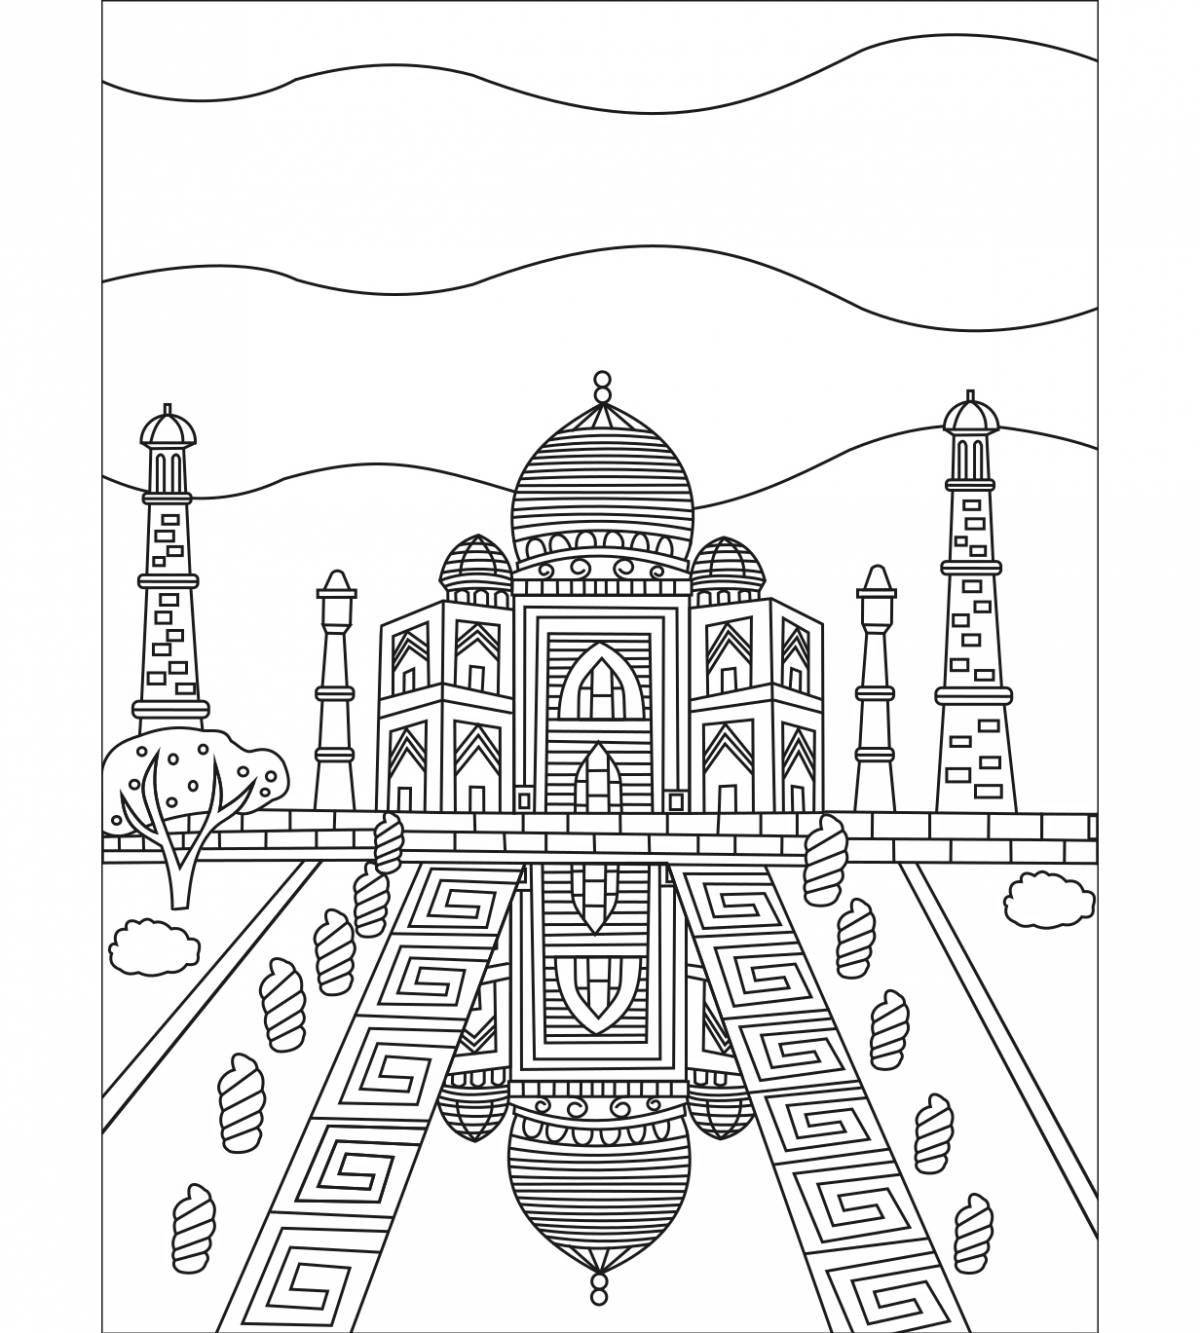 Rampant Taj Mahal coloring page